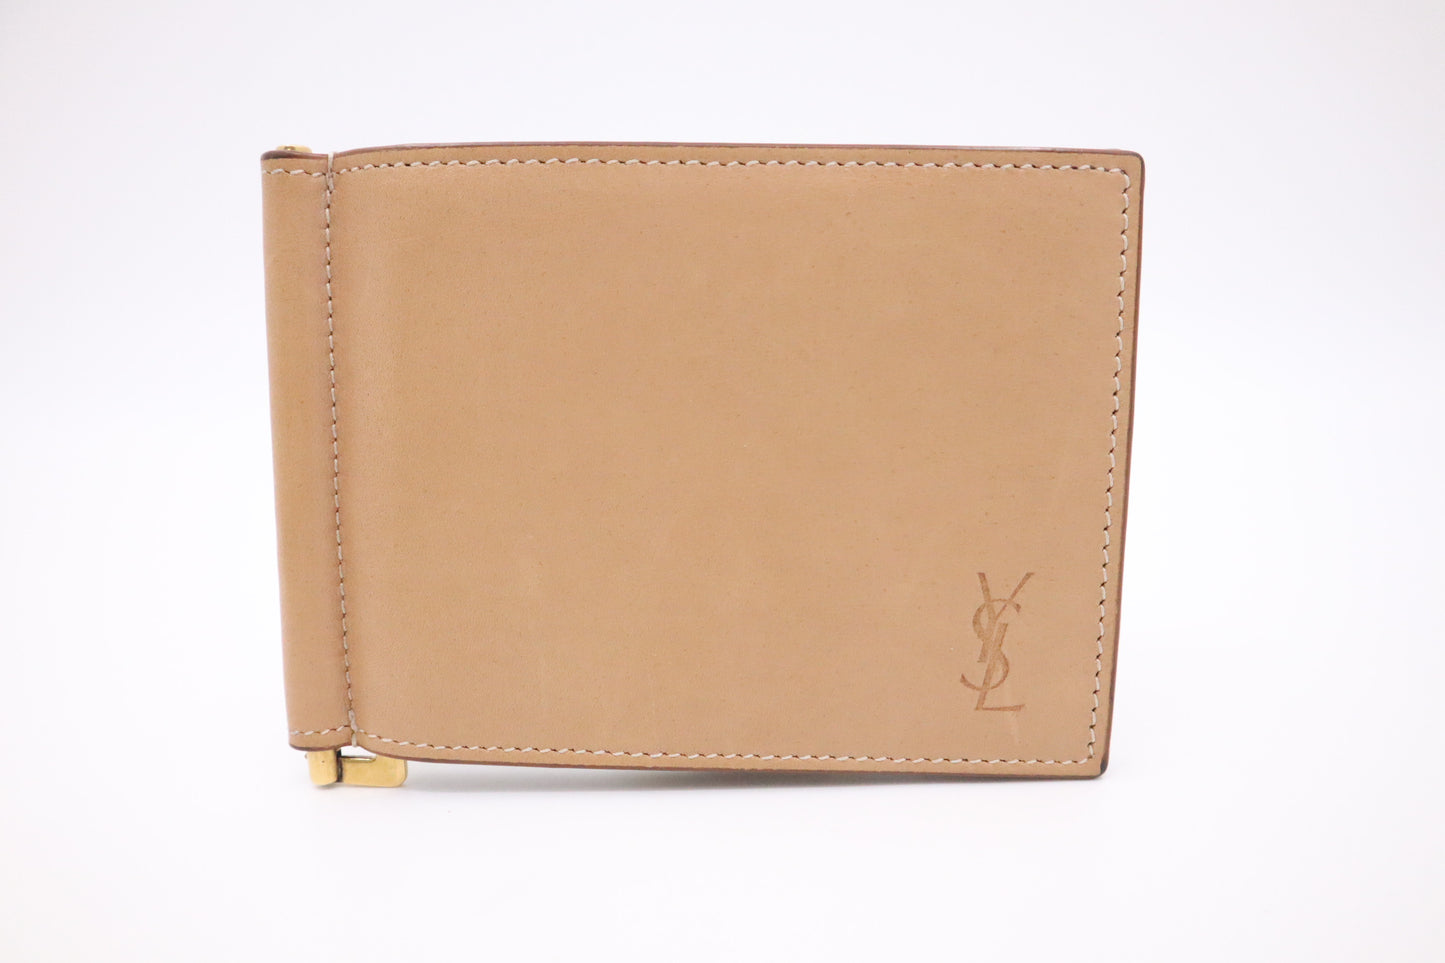 YSL Saint Laurent Bifold Wallet in Tan Leather